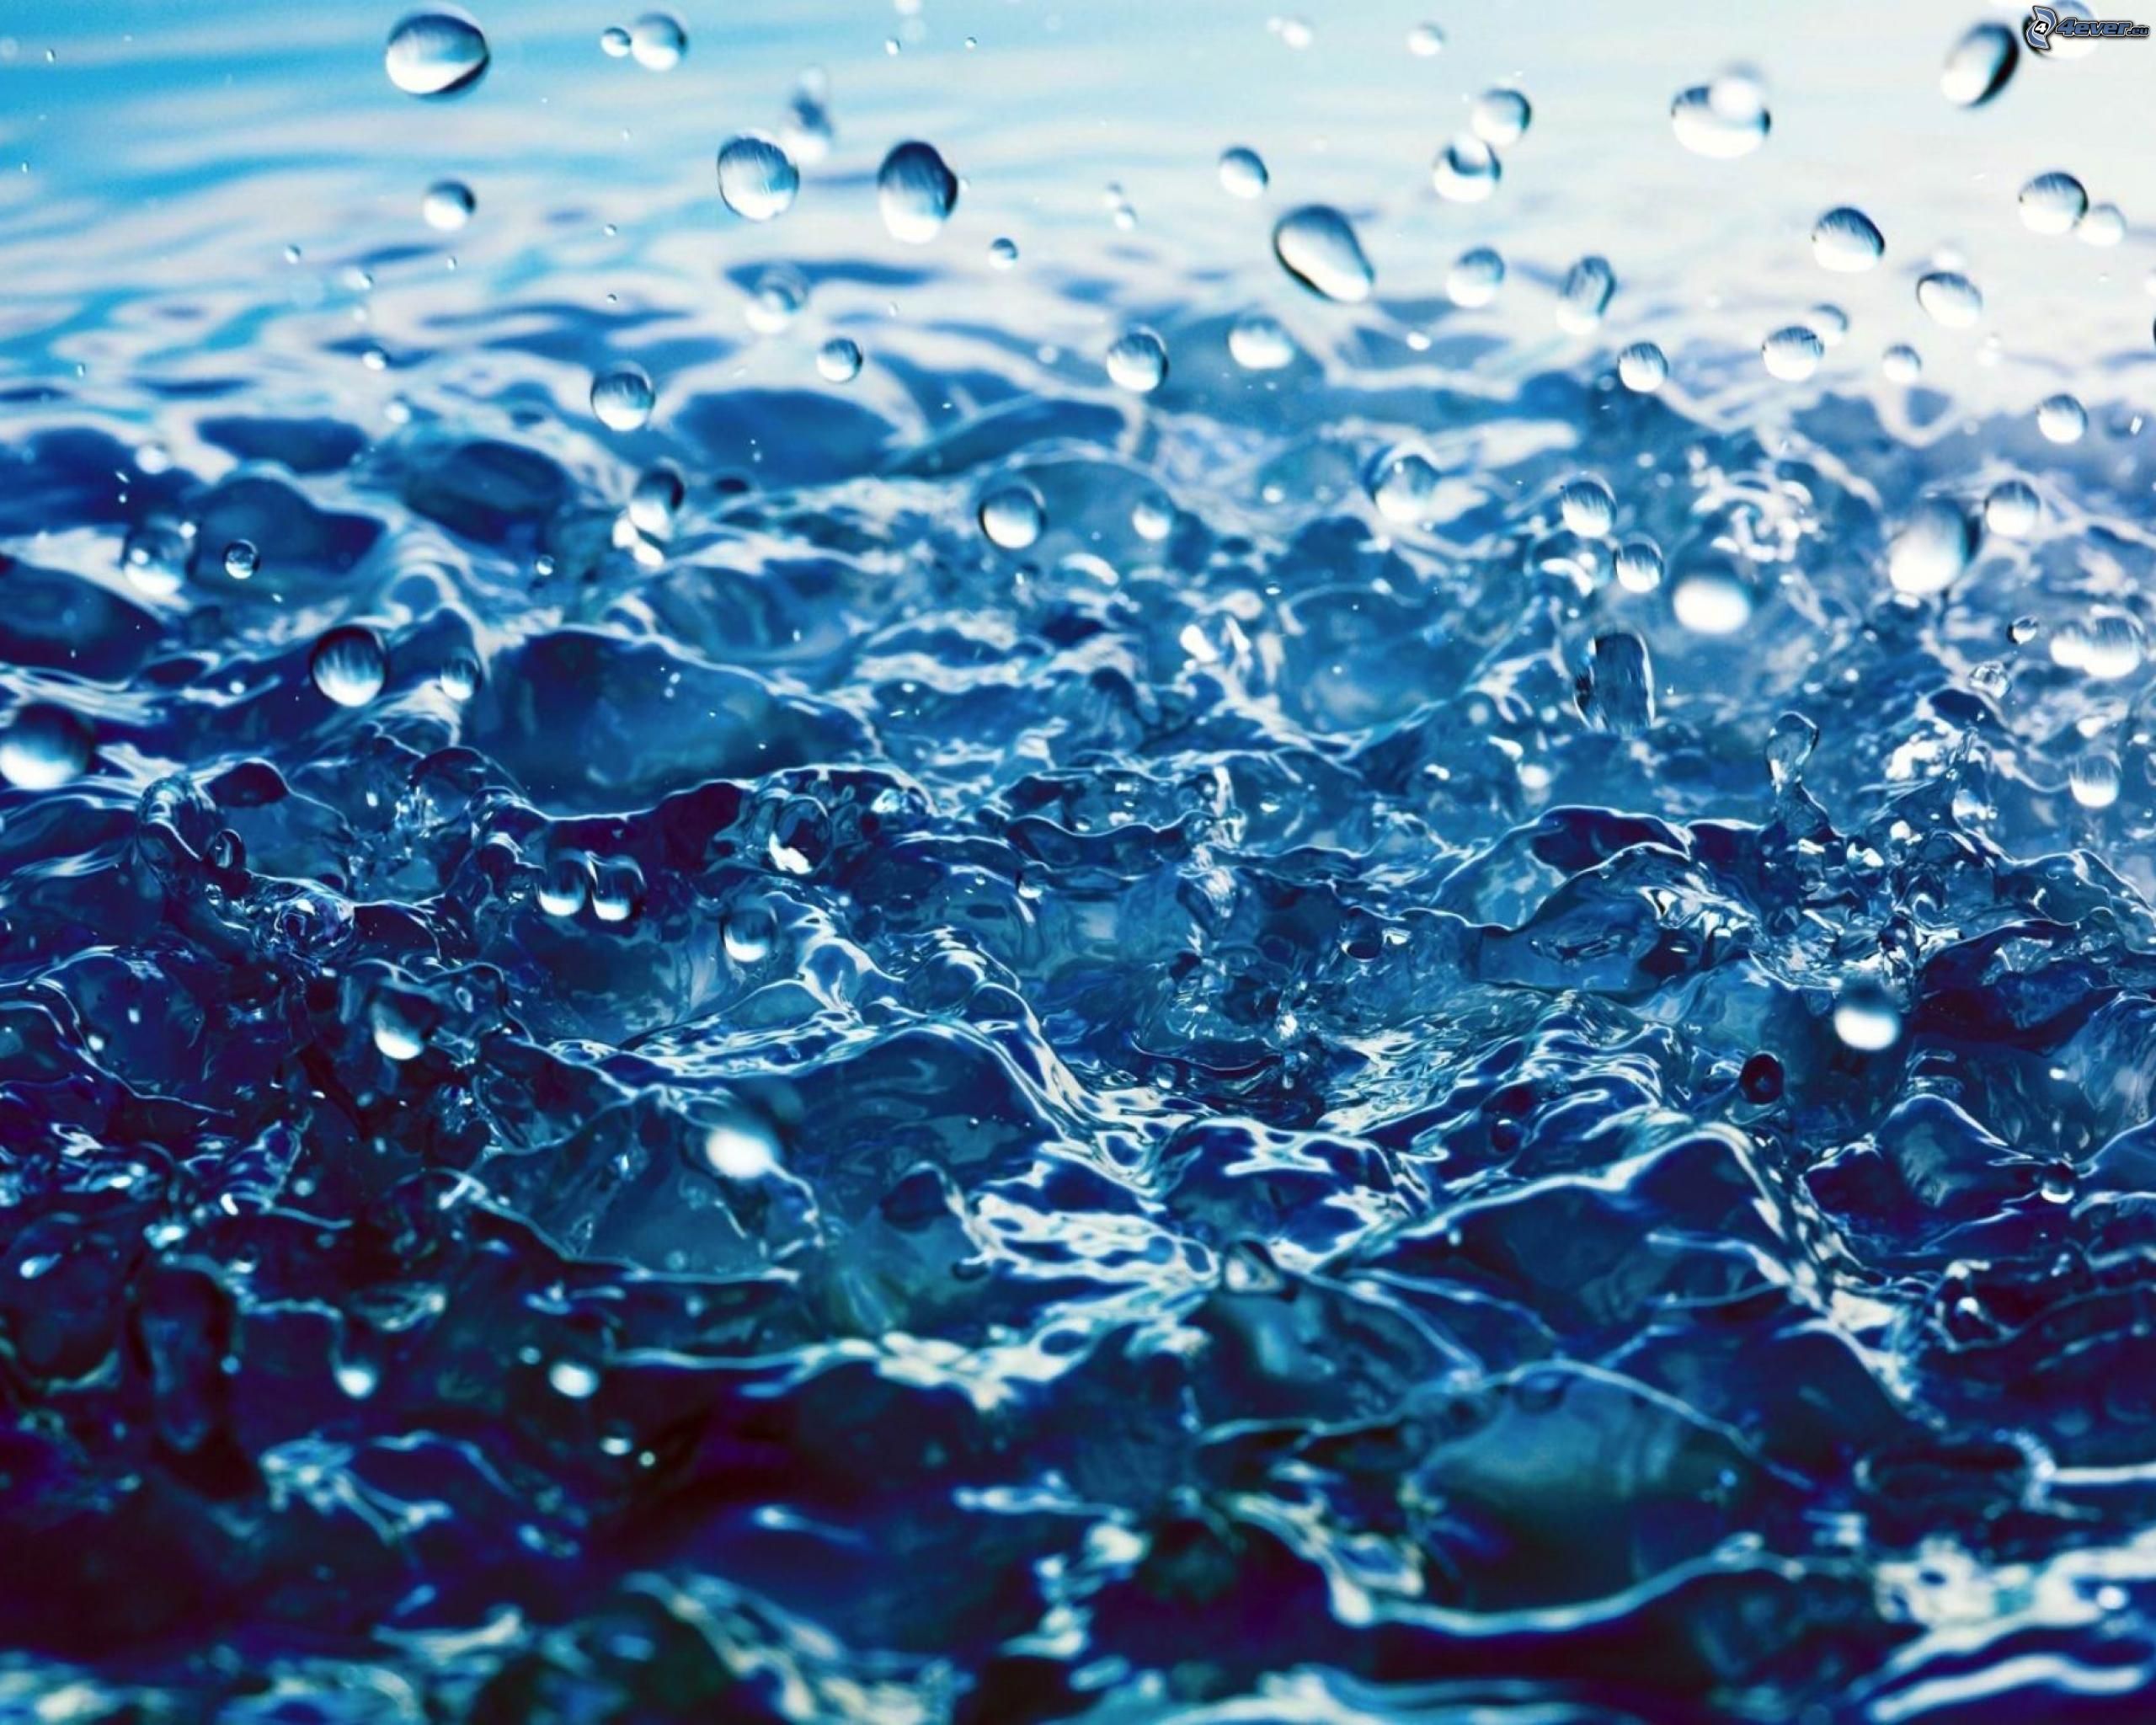 Rossi: “L’acqua deve tornare pubblica”. Pronta una proposta di legge